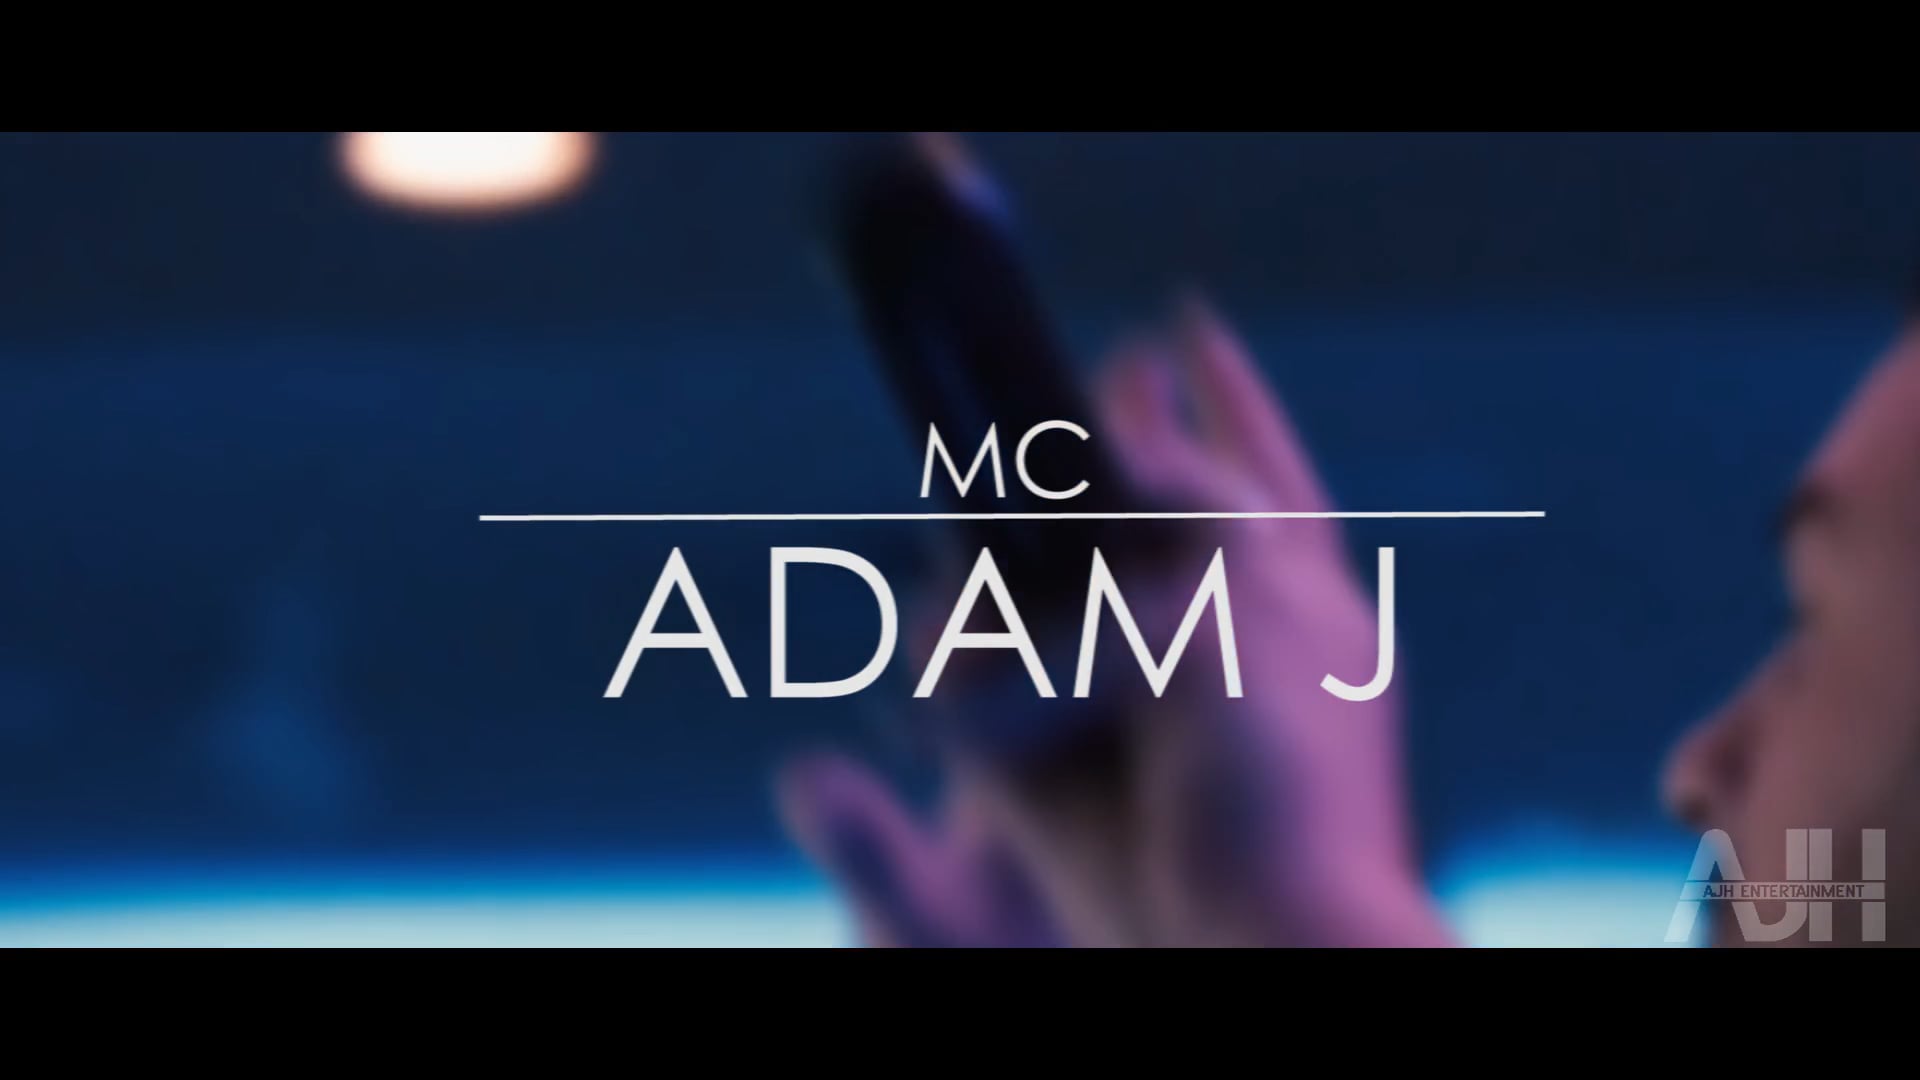 AJH ENTERTAINMENT Presents: MC ADAM J